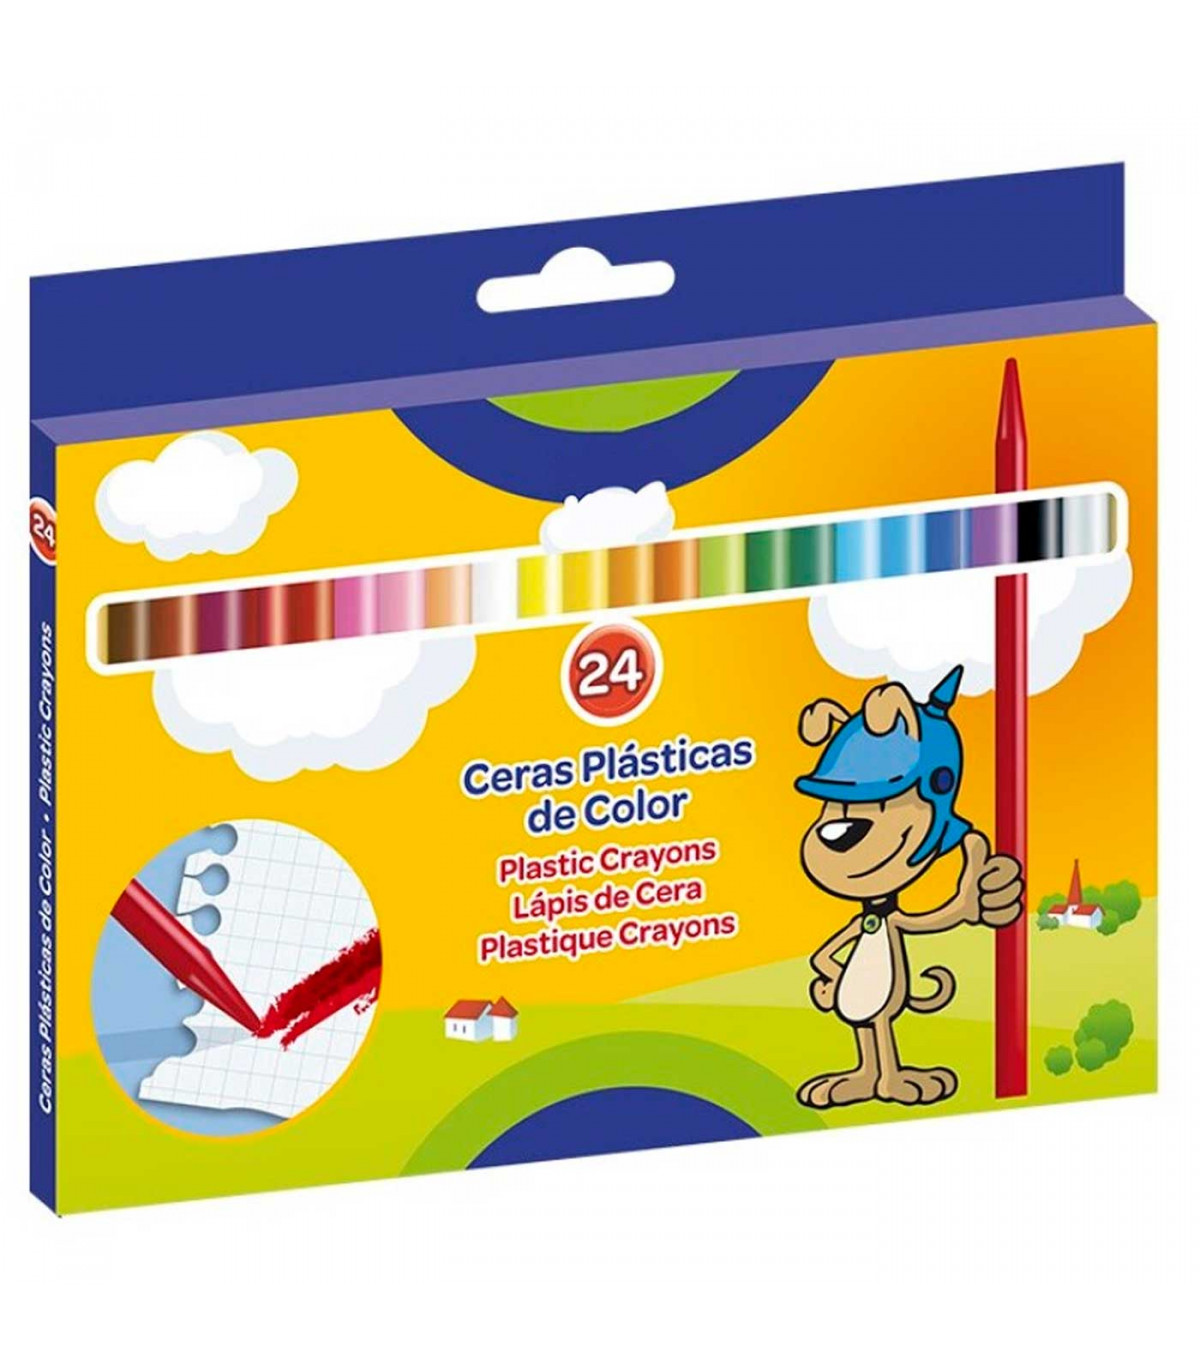 Riego inercia trono Tradineur - Caja de 24 ceras de colores para niños, material escolar,  colores vivos surtidos, ideal para colorear, dibujar